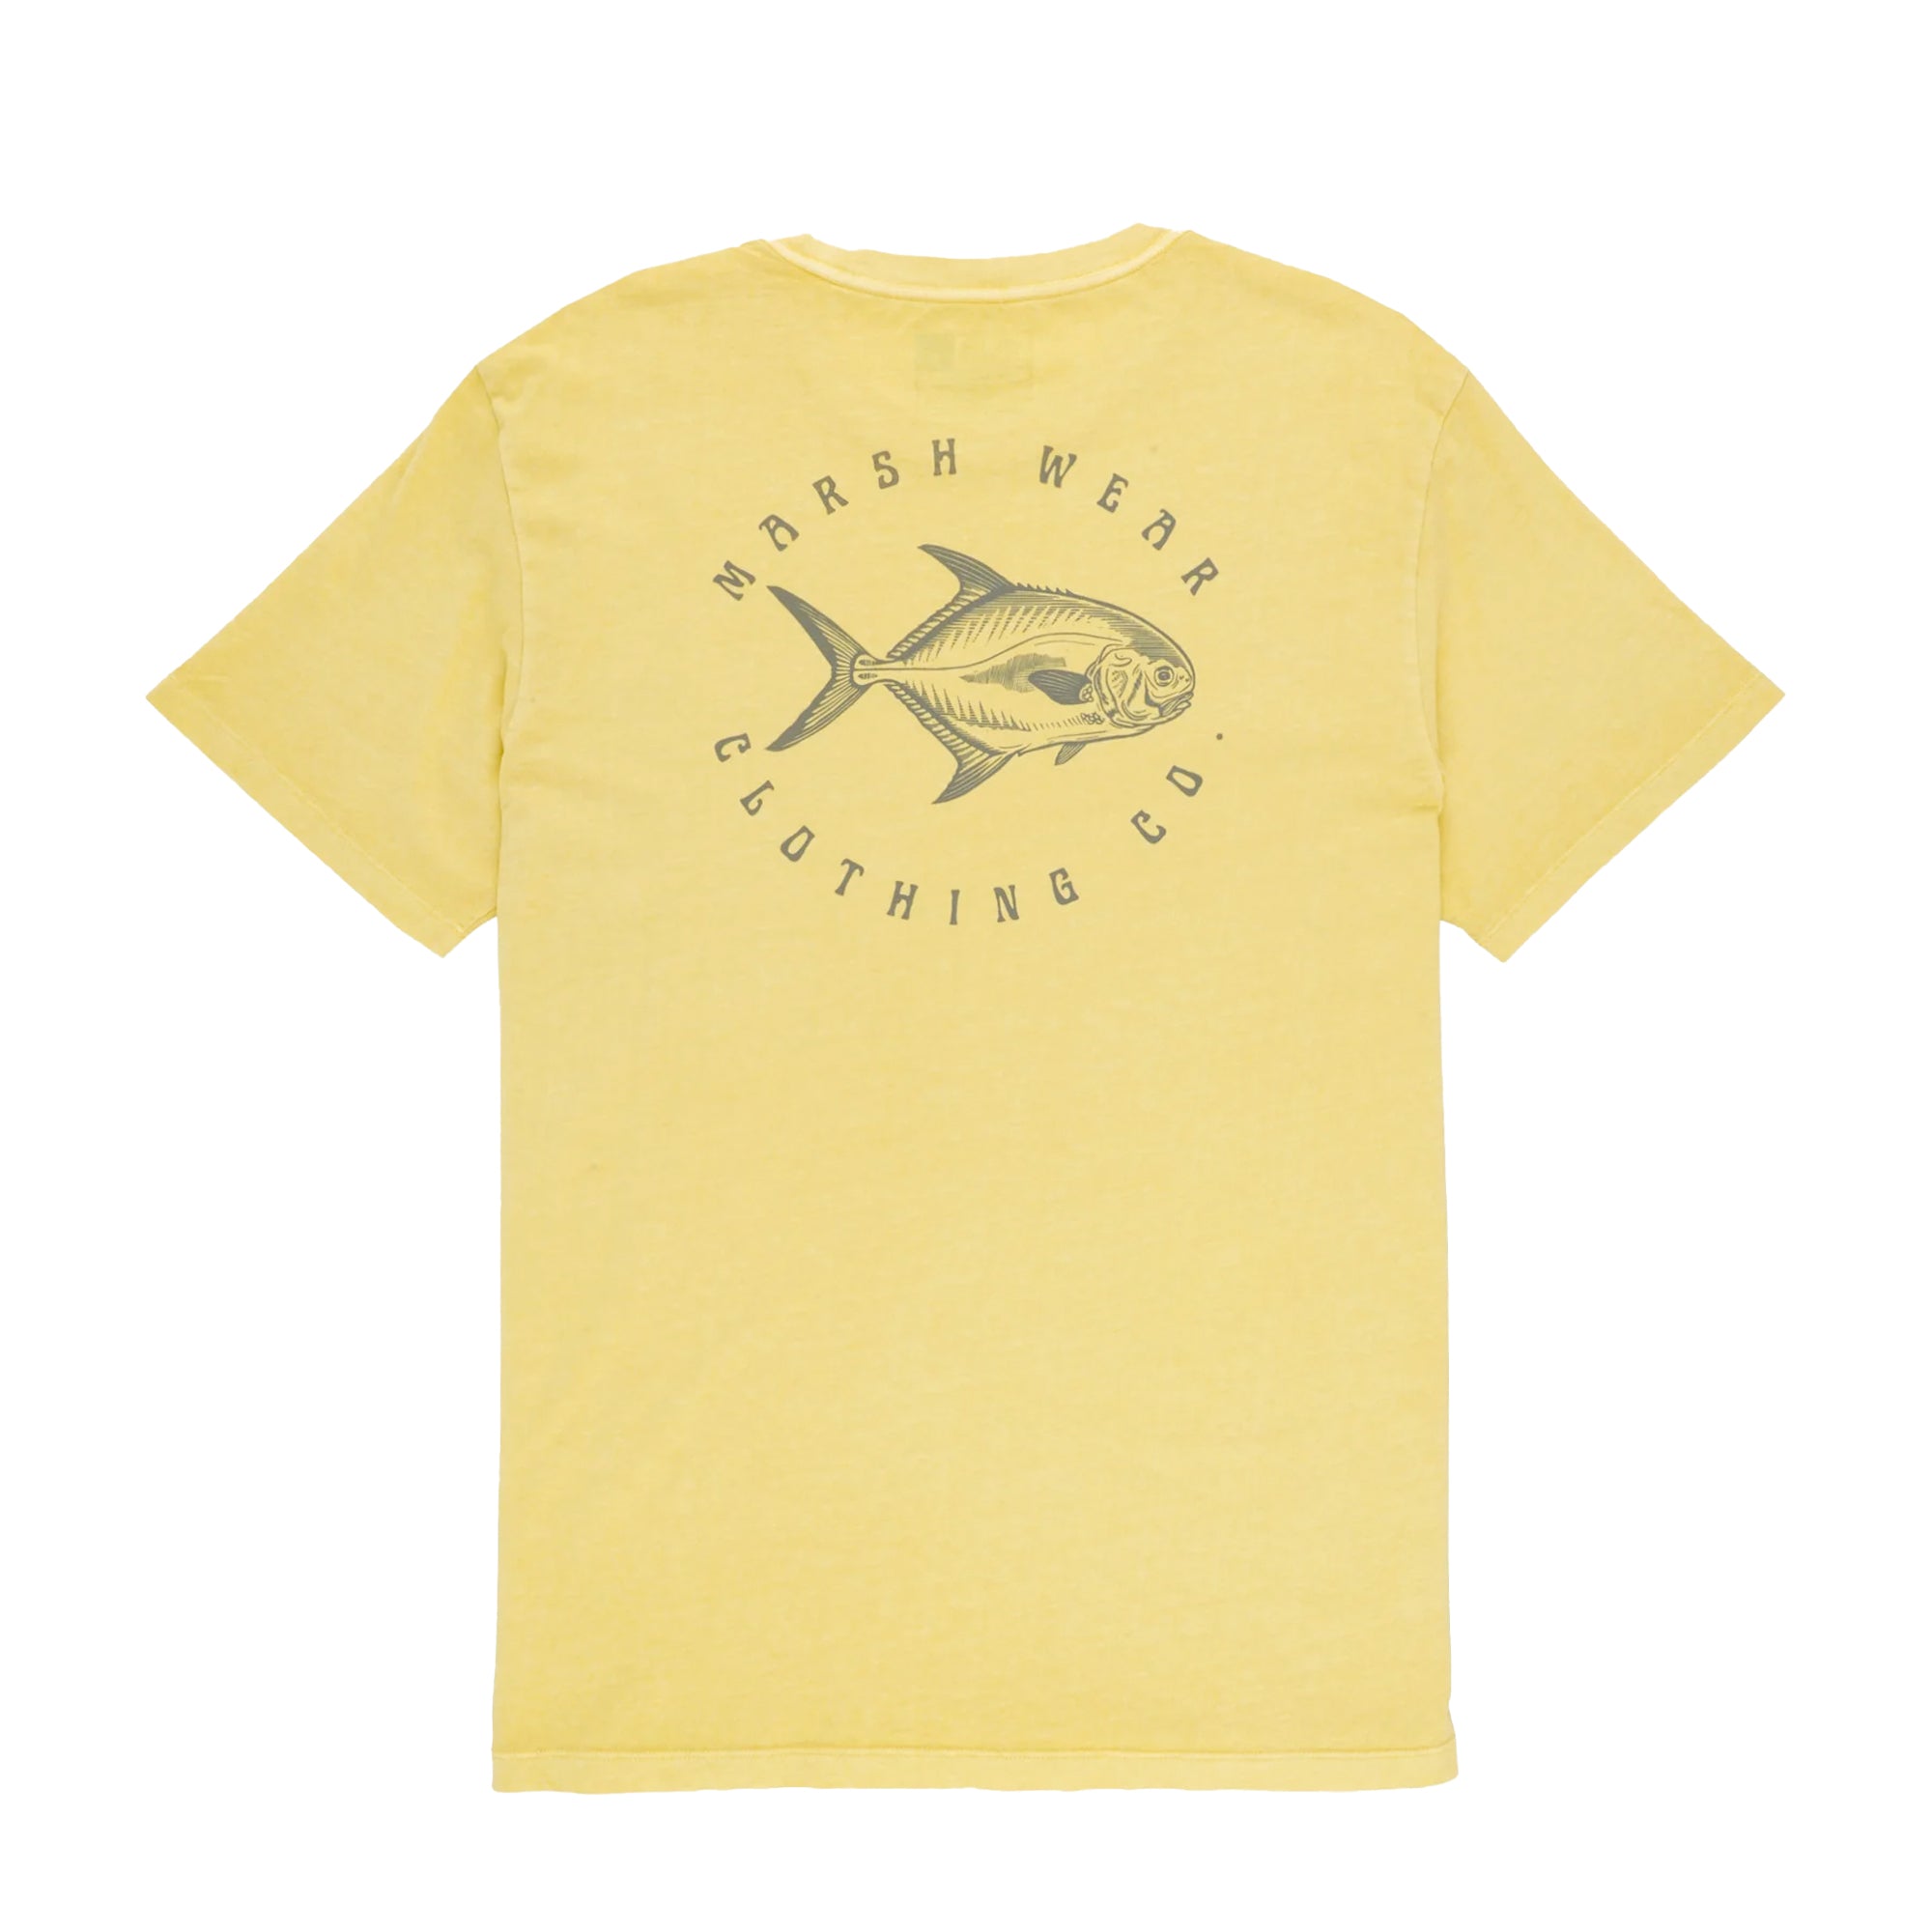 Marsh Wear Carnet Men's S/S T-Shirt